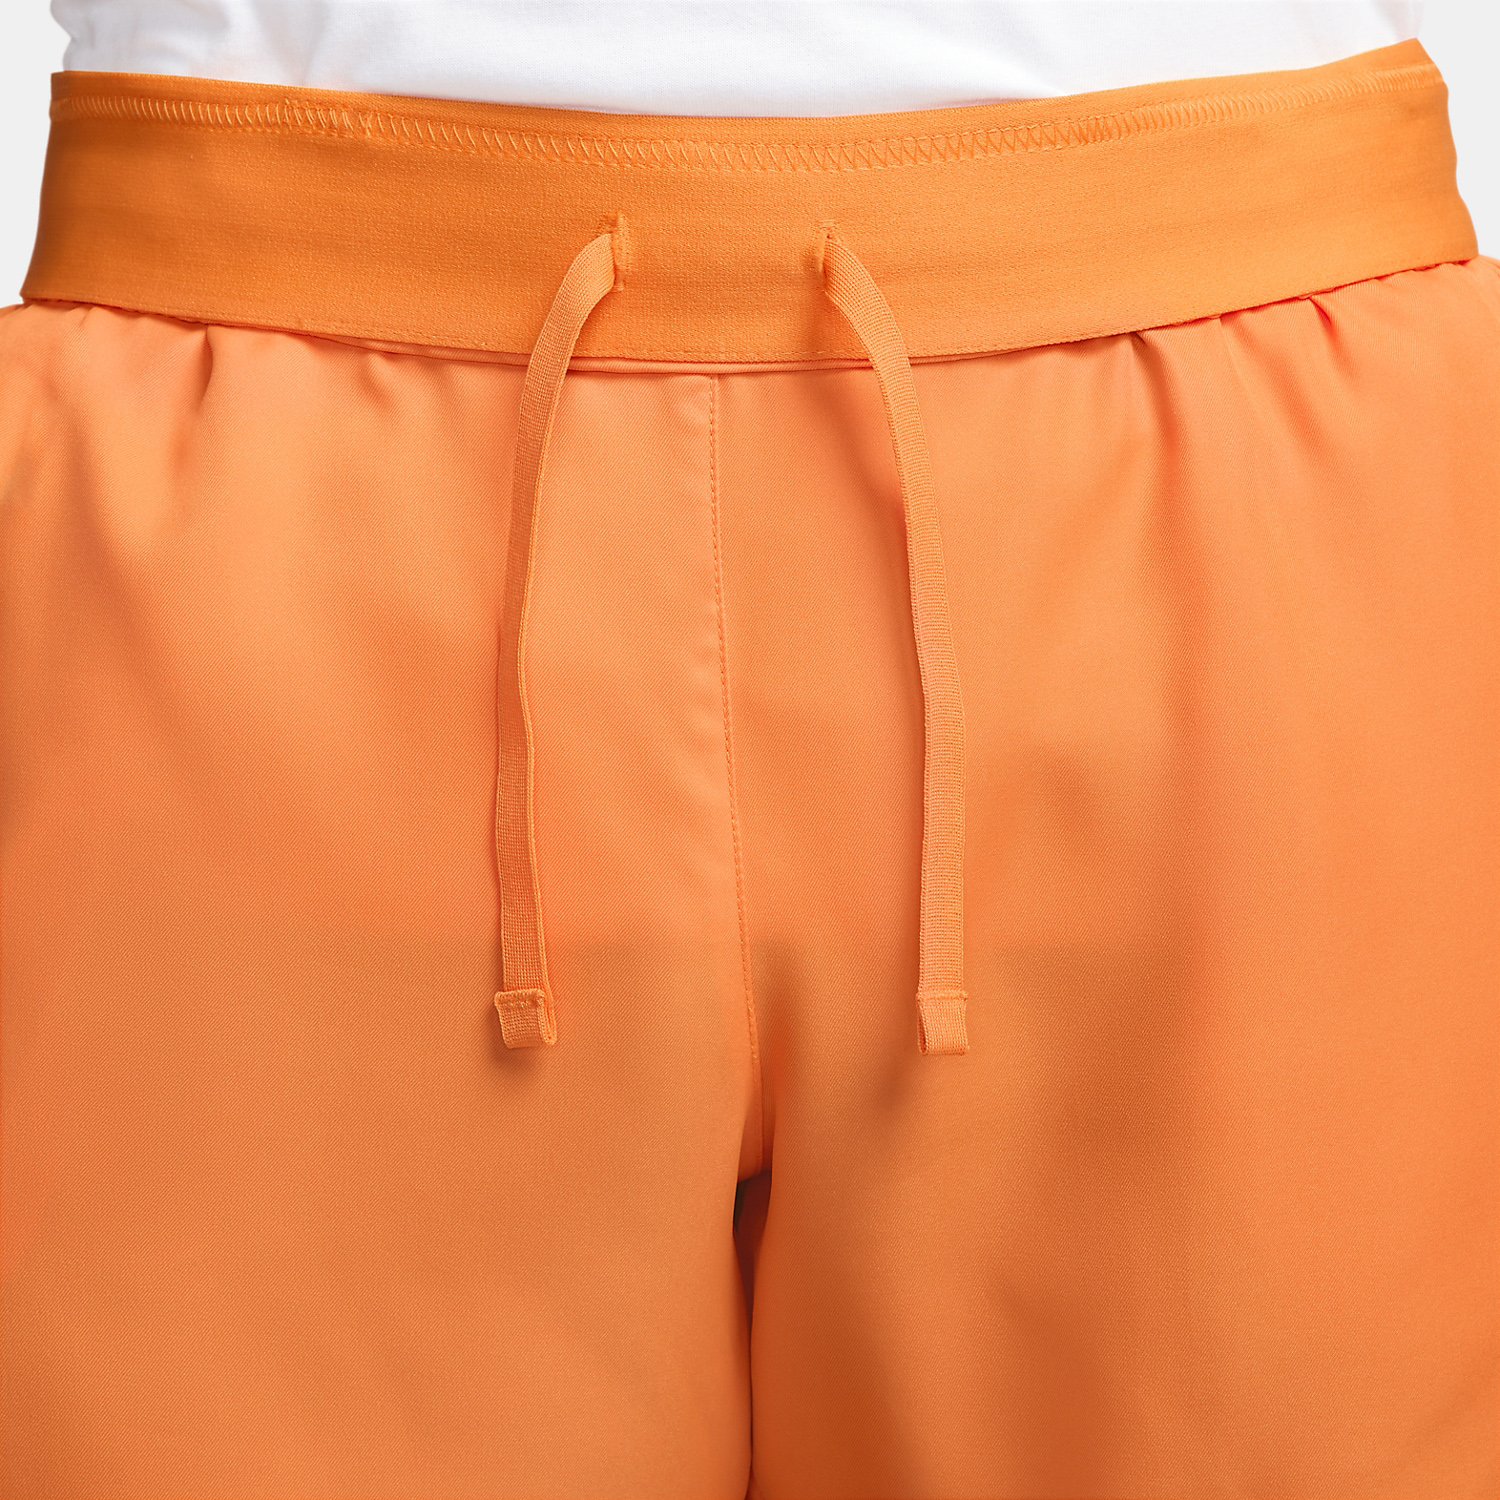 Nike Flex Victory 7in Men's Tennis Shorts - Bright Mandarin